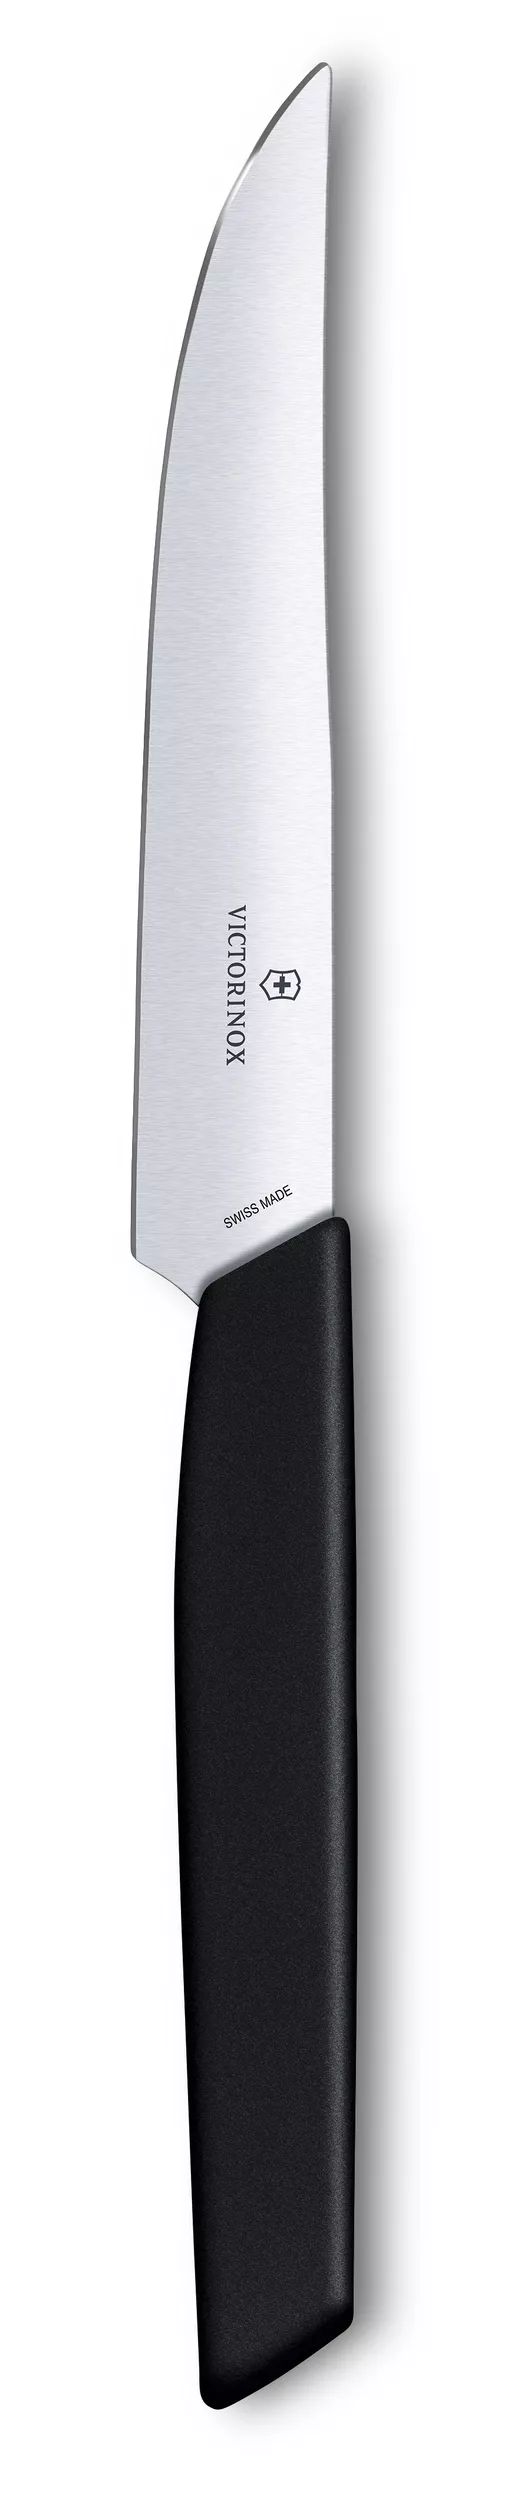 Swiss Modern Steakmesser - 6.9003.12